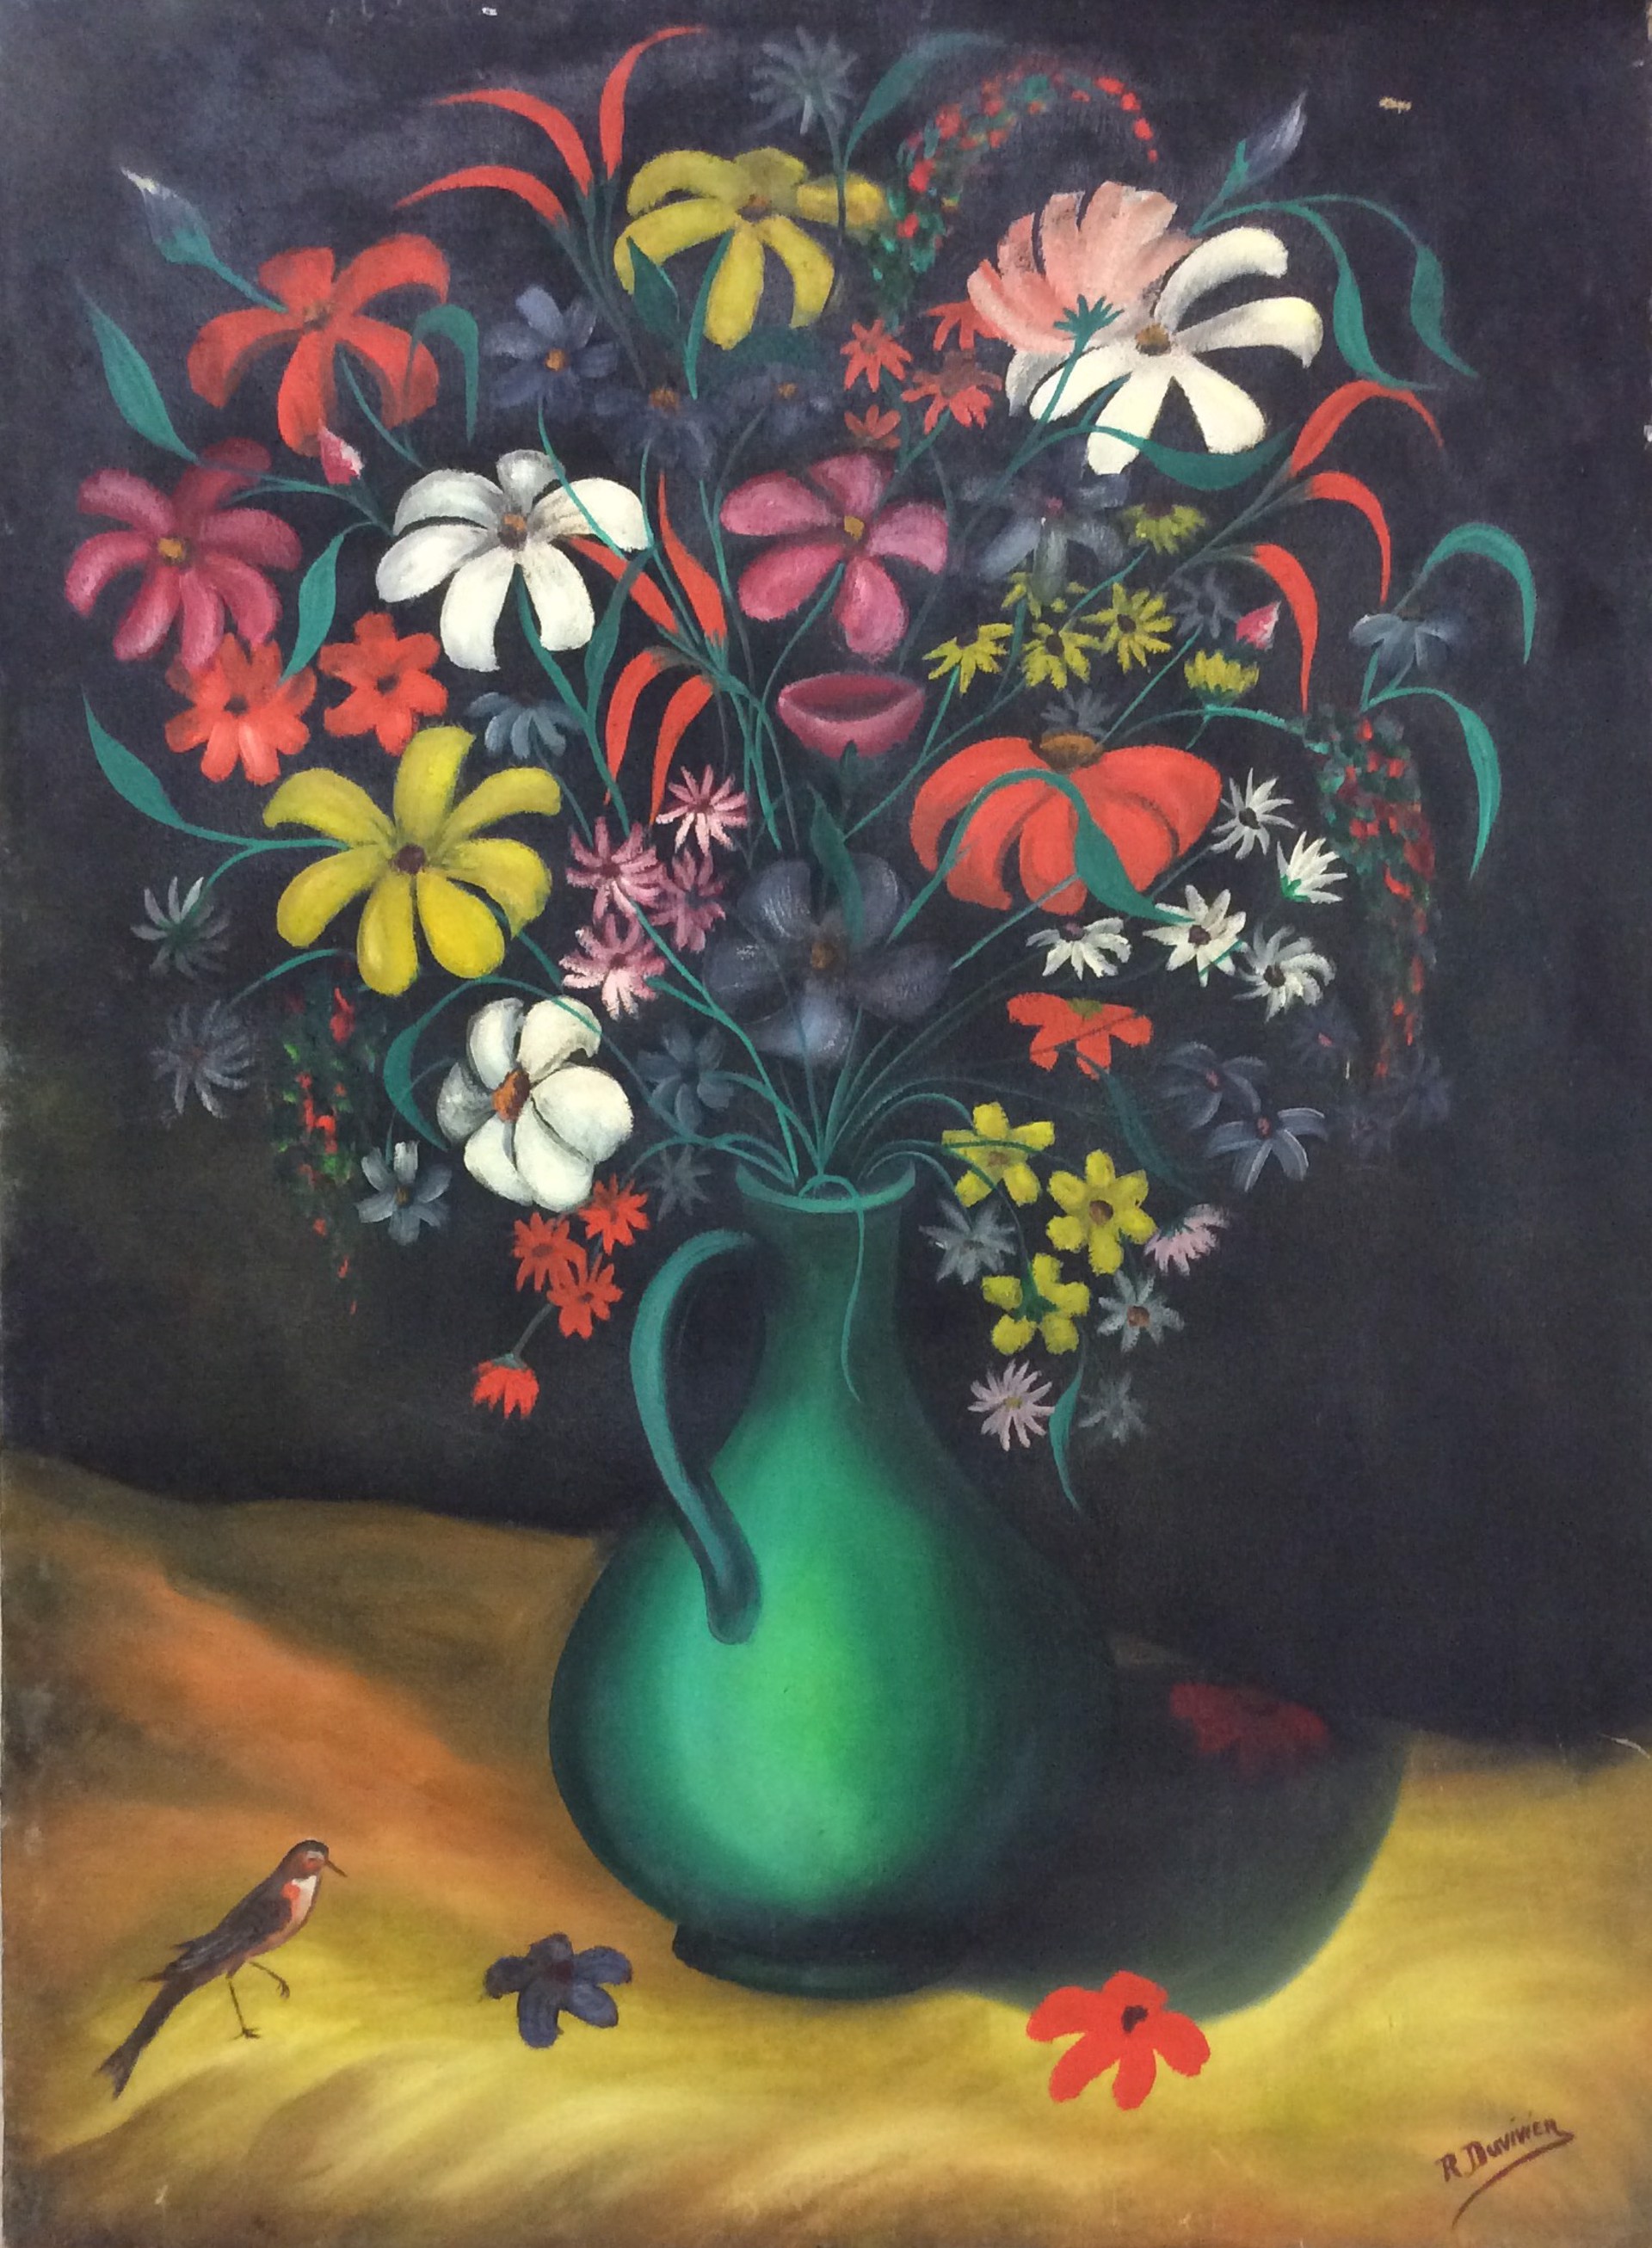 Vase of Flowers #1-2-95MFN by Raymond Duvivier (Haitian, b.1935)